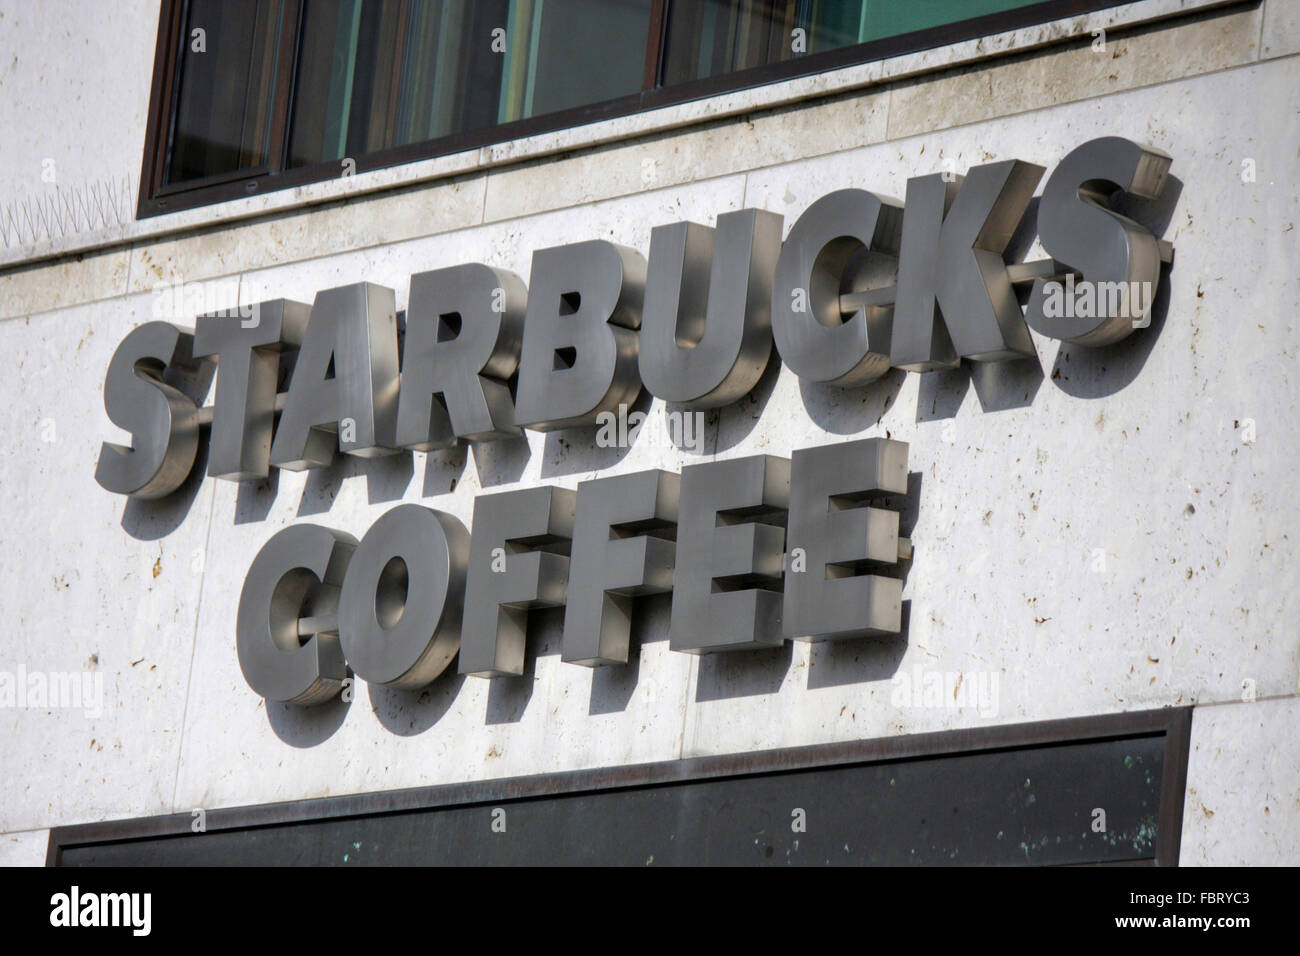 Markenname: 'Starbucks Coffee', Berlin. Stock Photo